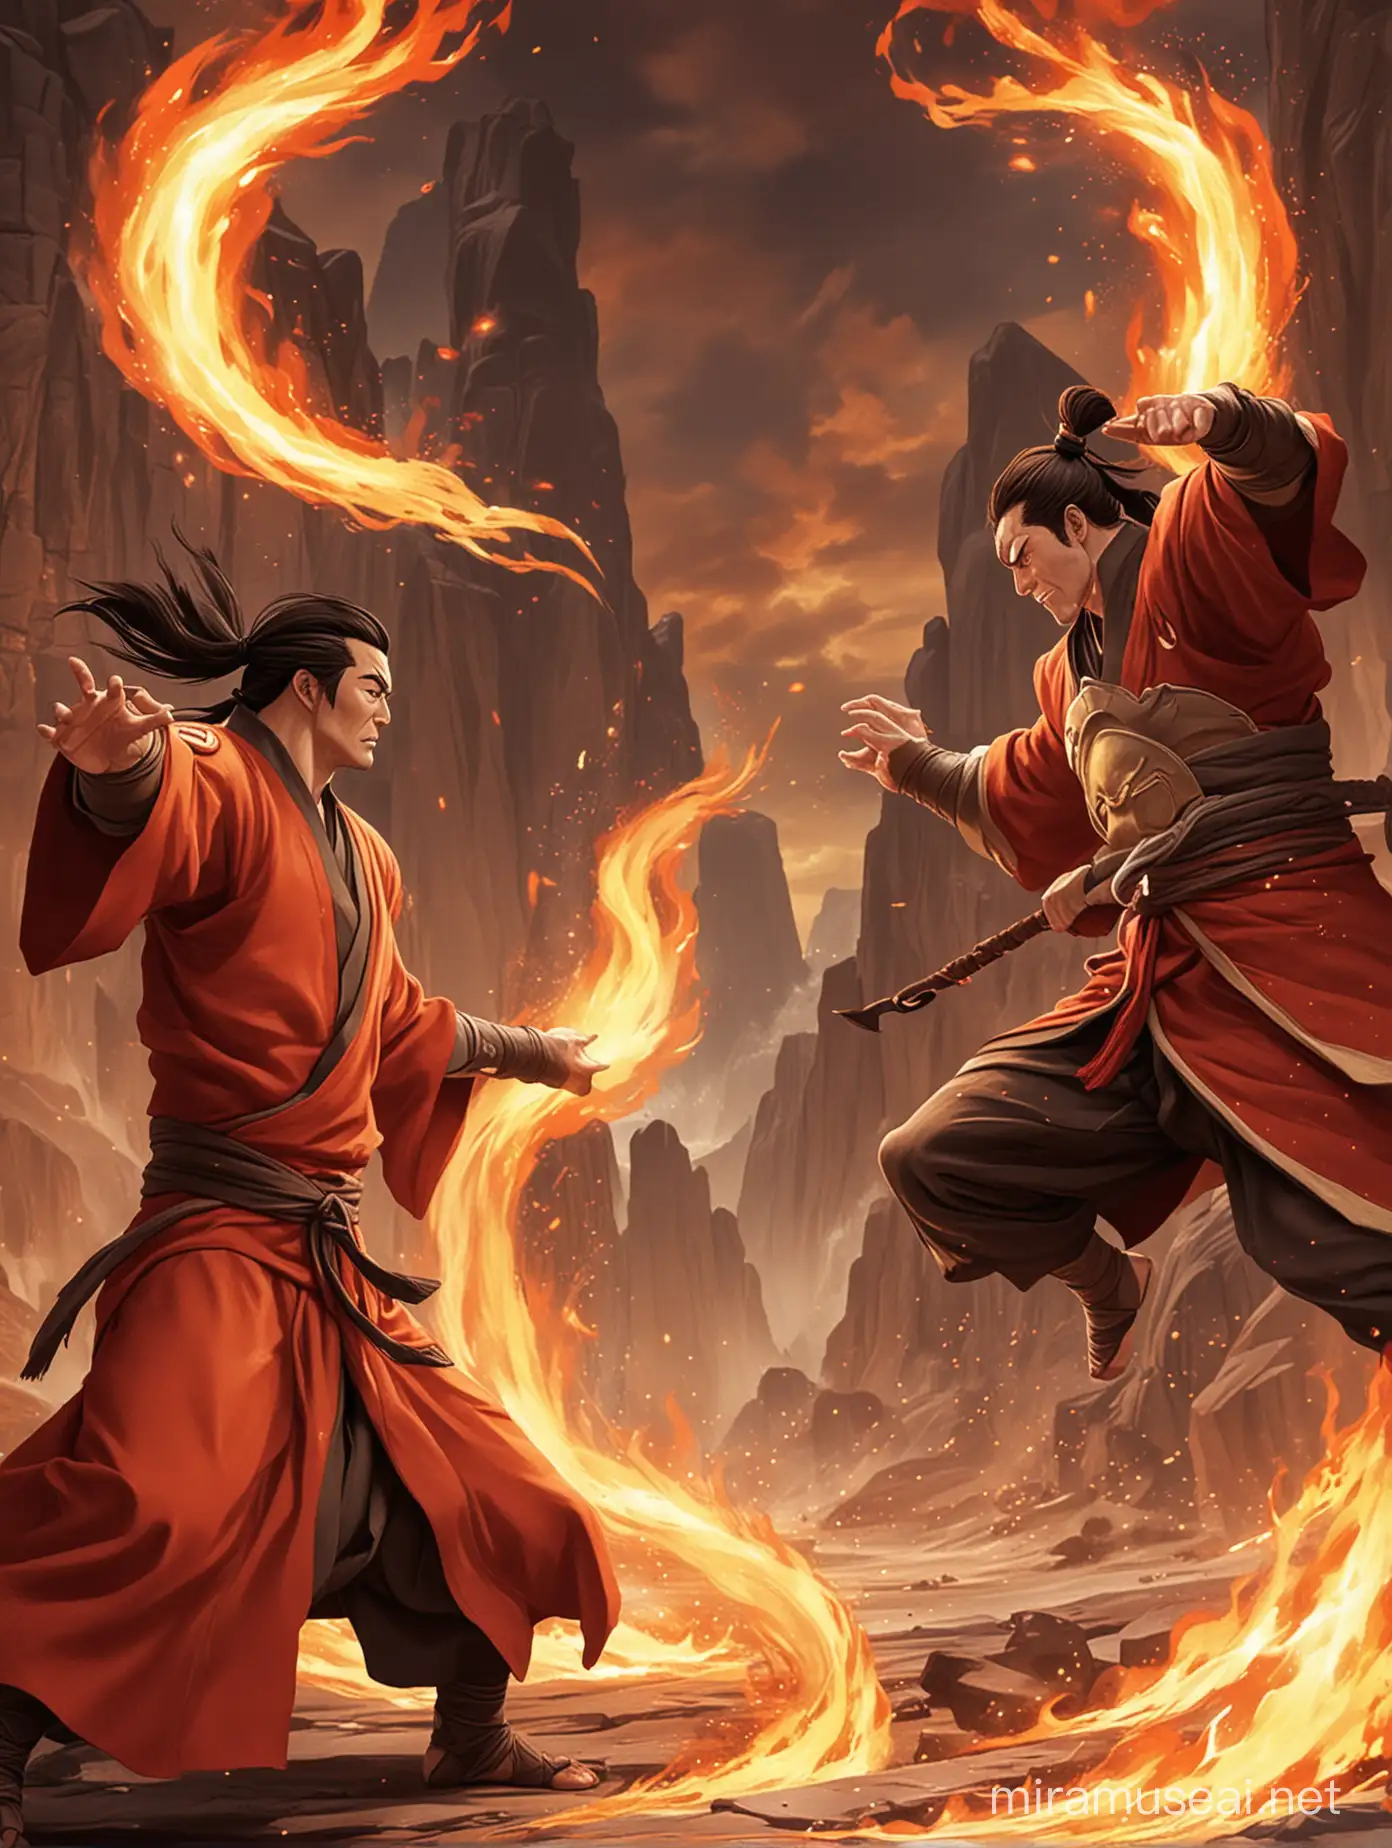 Fire Lord Ozai fire bender fighting versus muscular Iroh